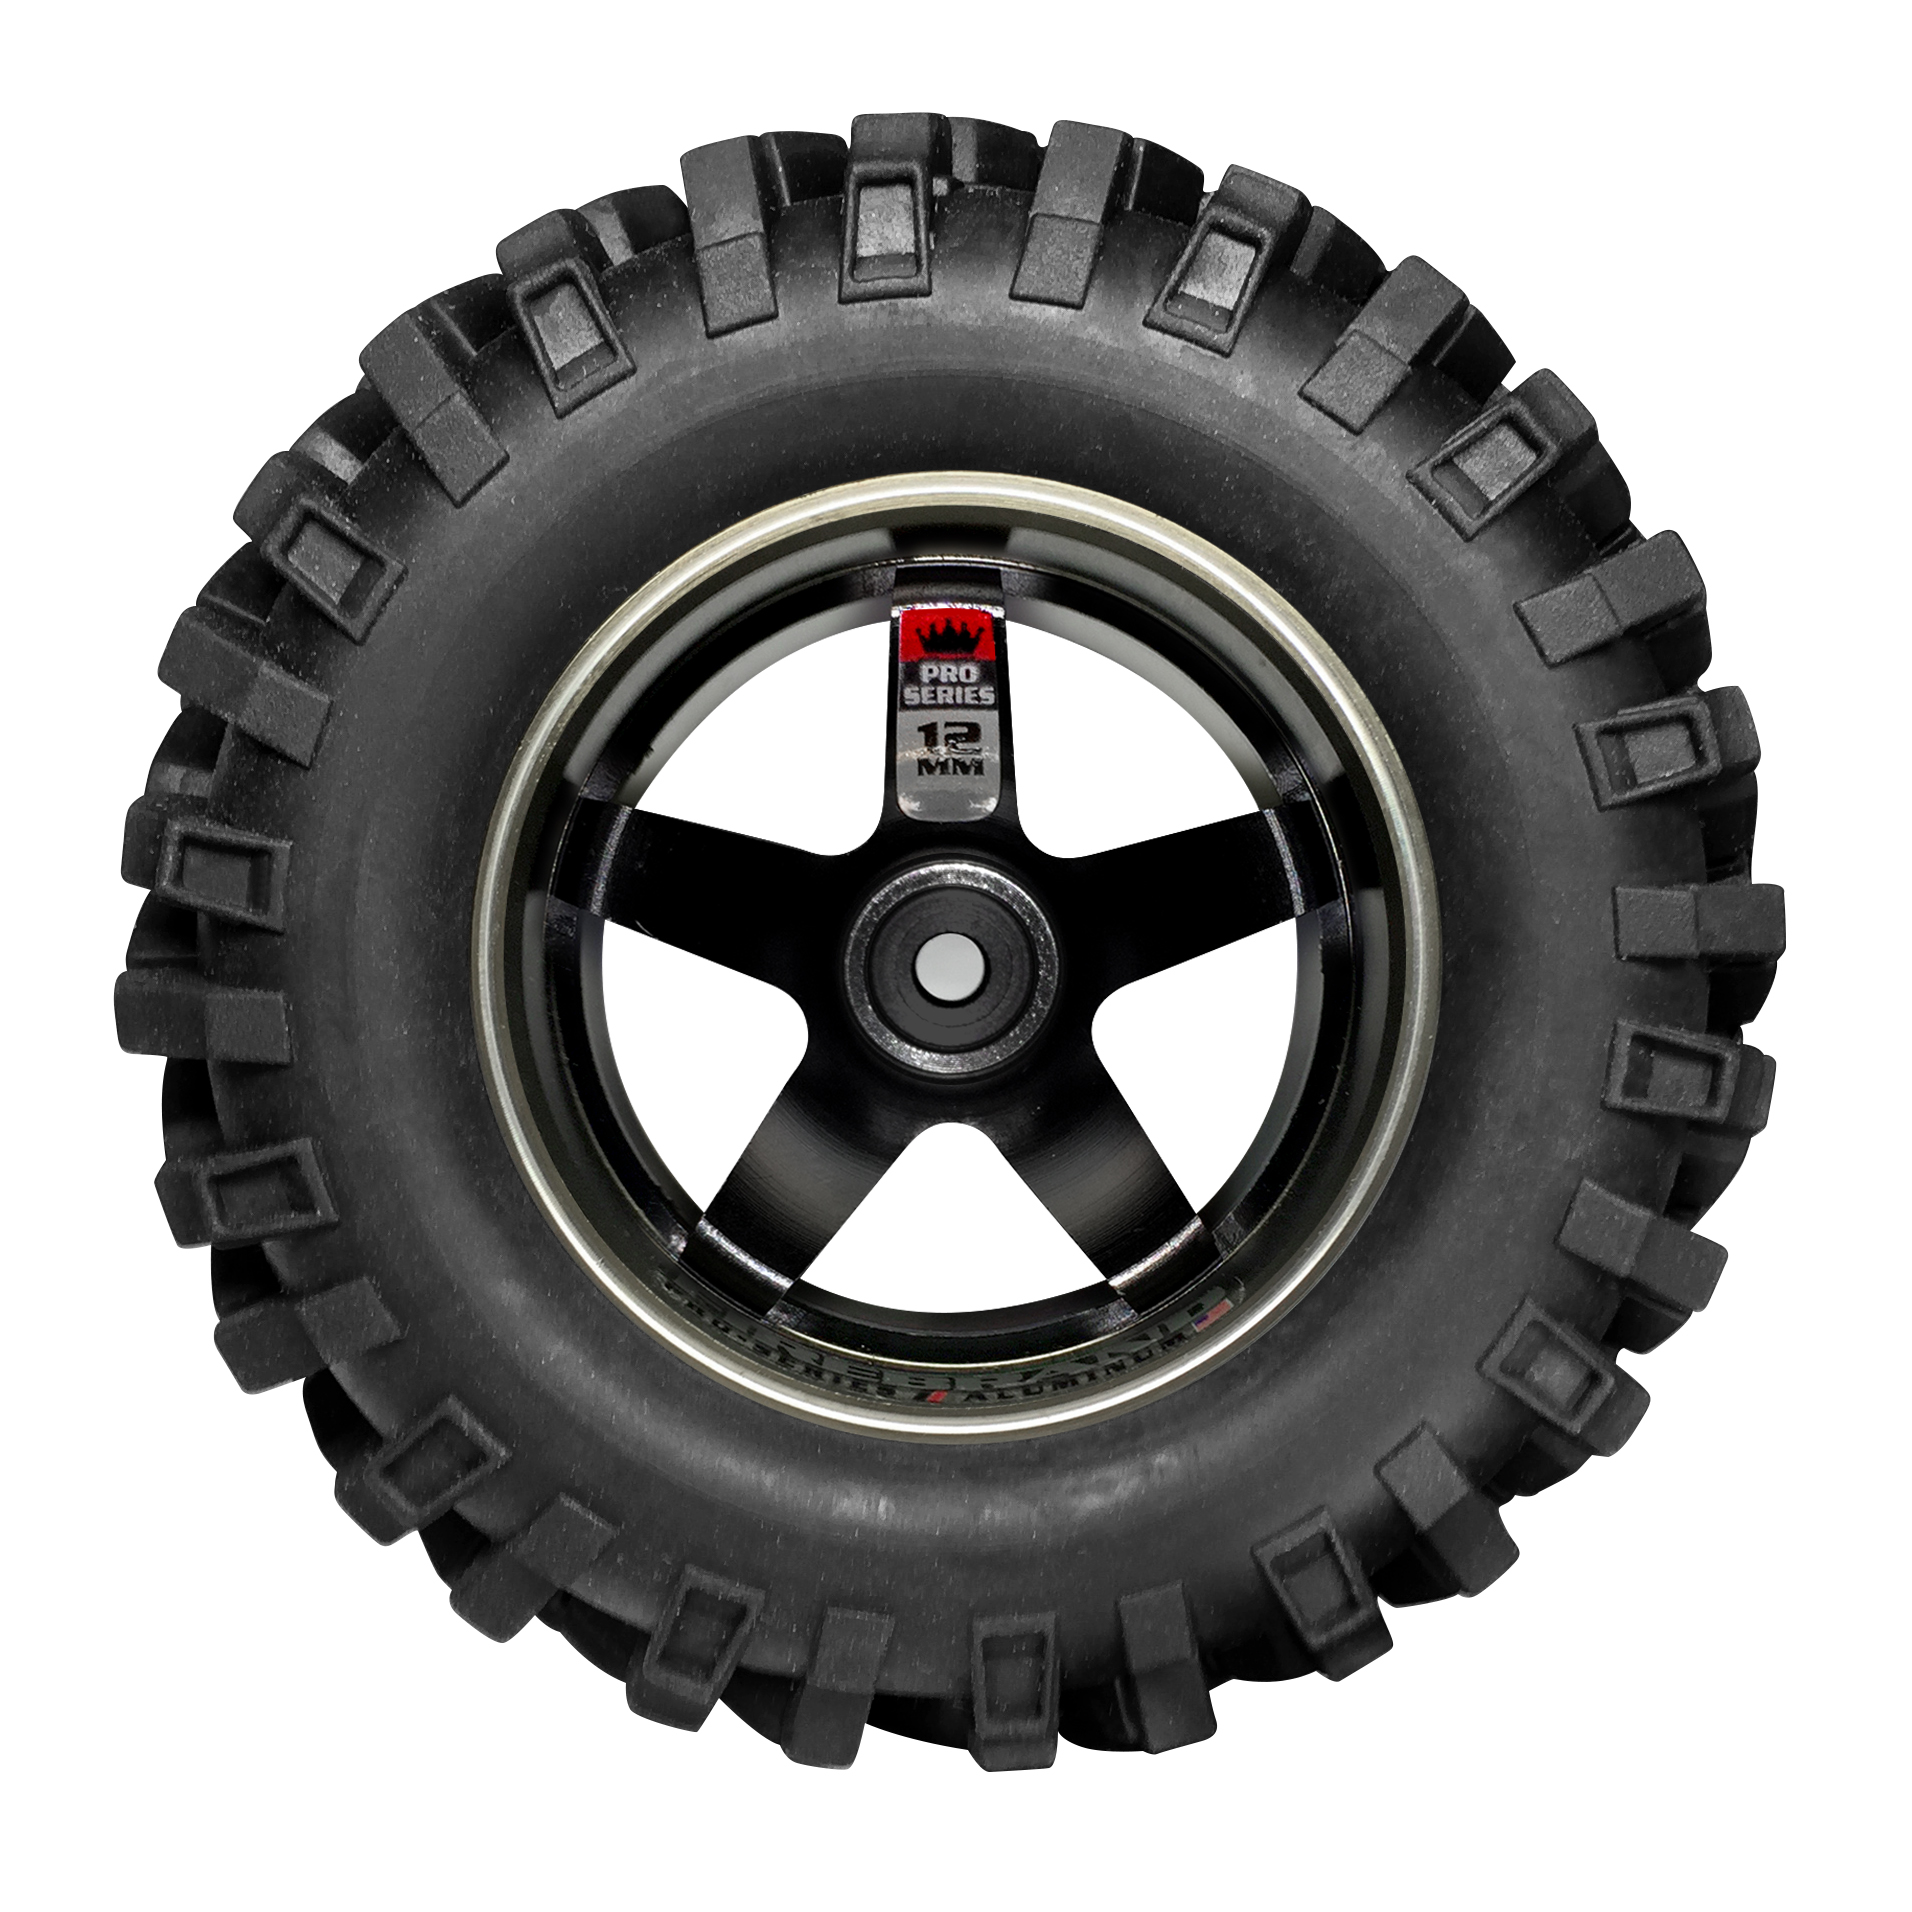 4 Firebrand RC HighFive PRO SERIES Aluminum Drift Wheels Gunmetal/Black